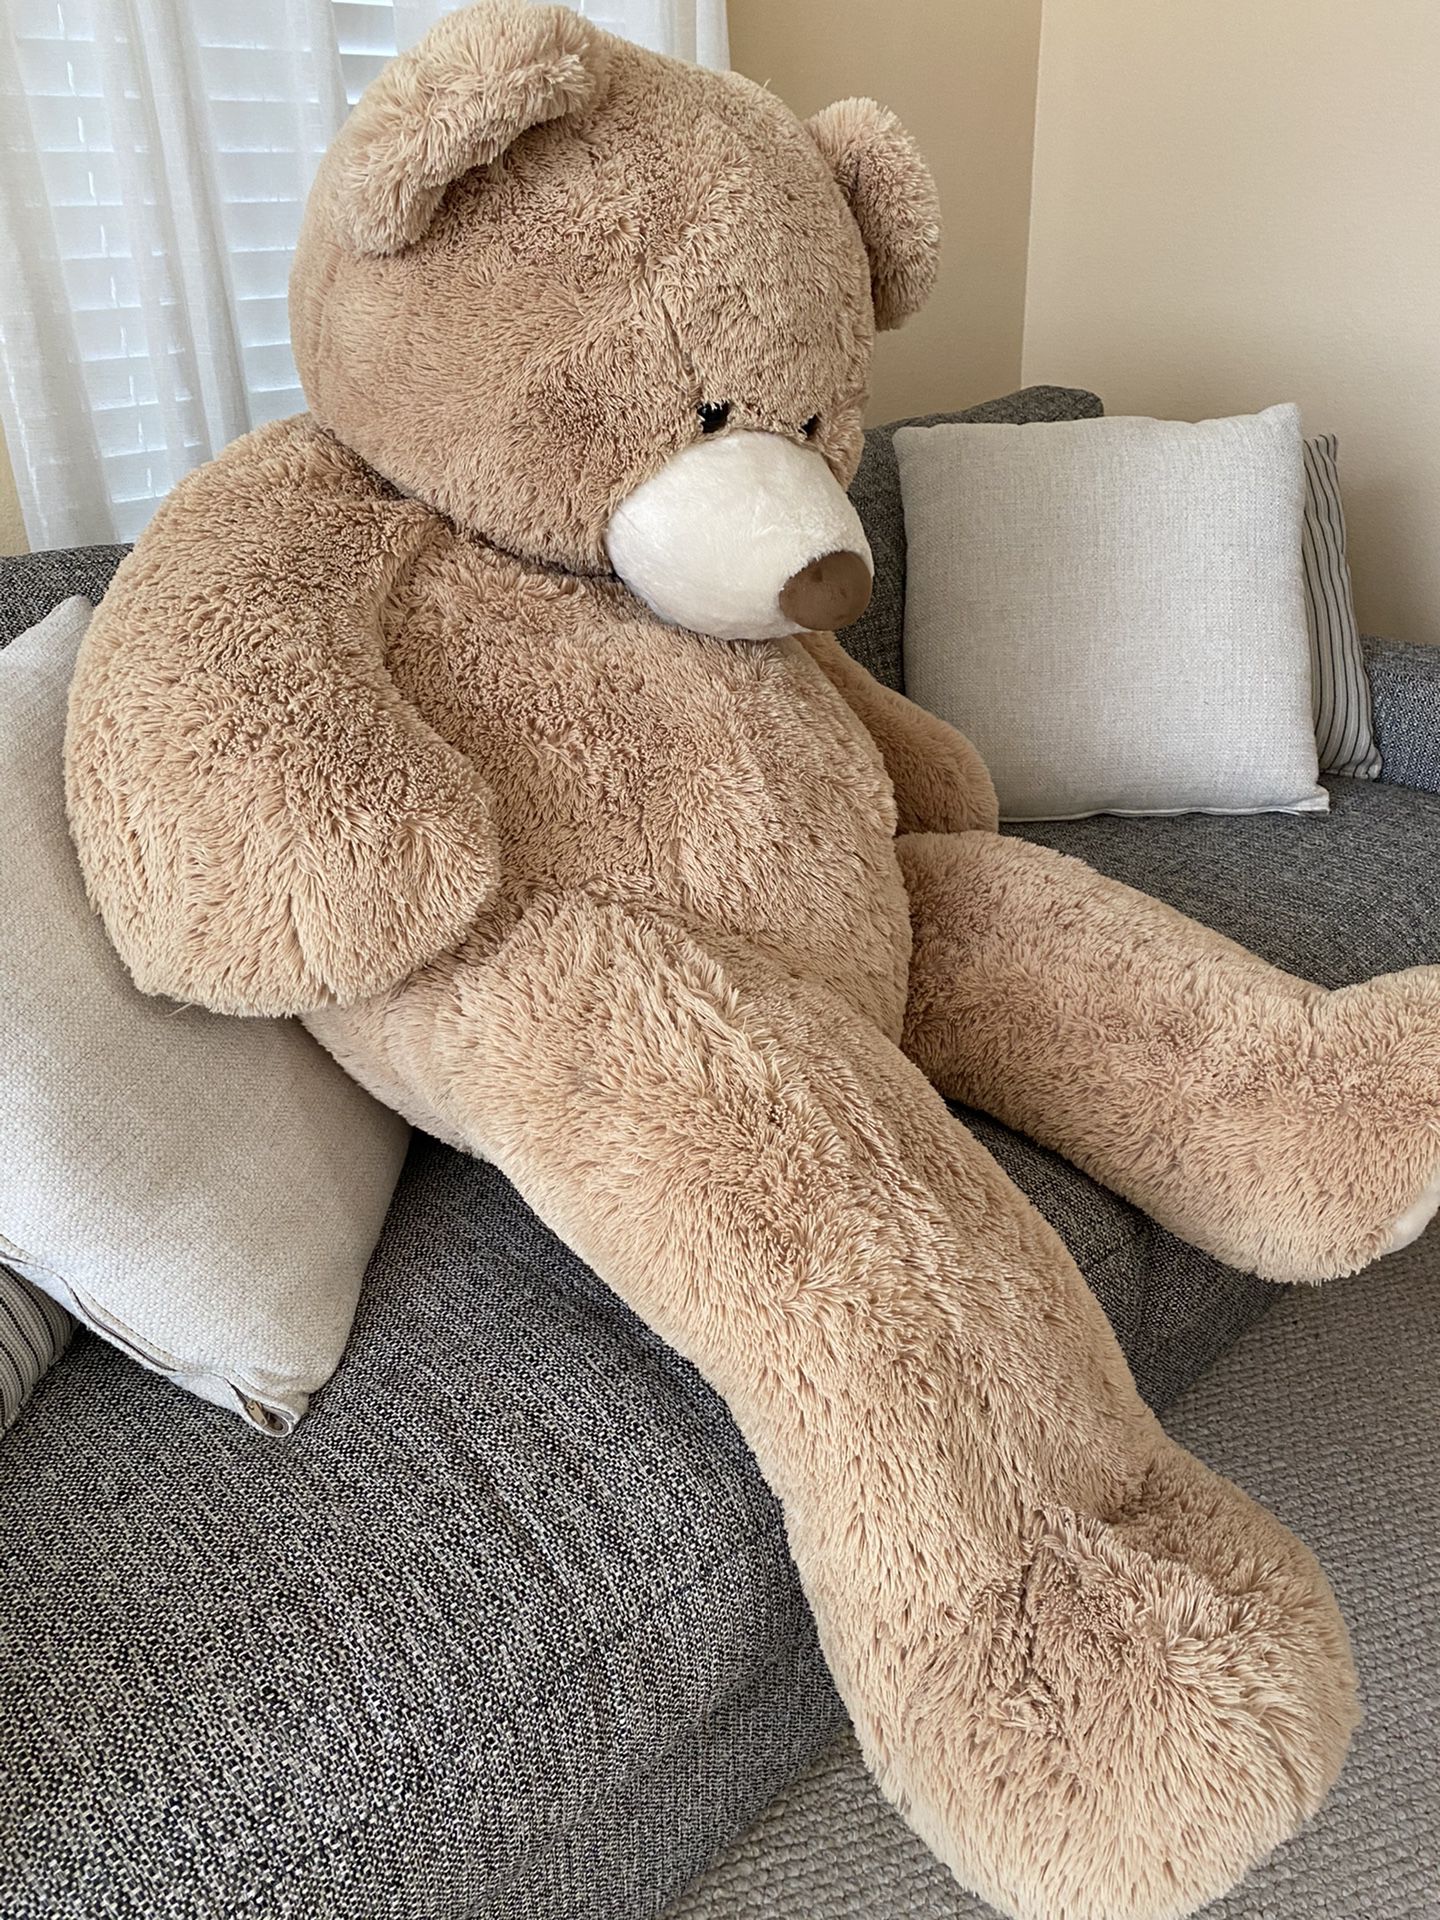 5’ tall stuffed teddy bear